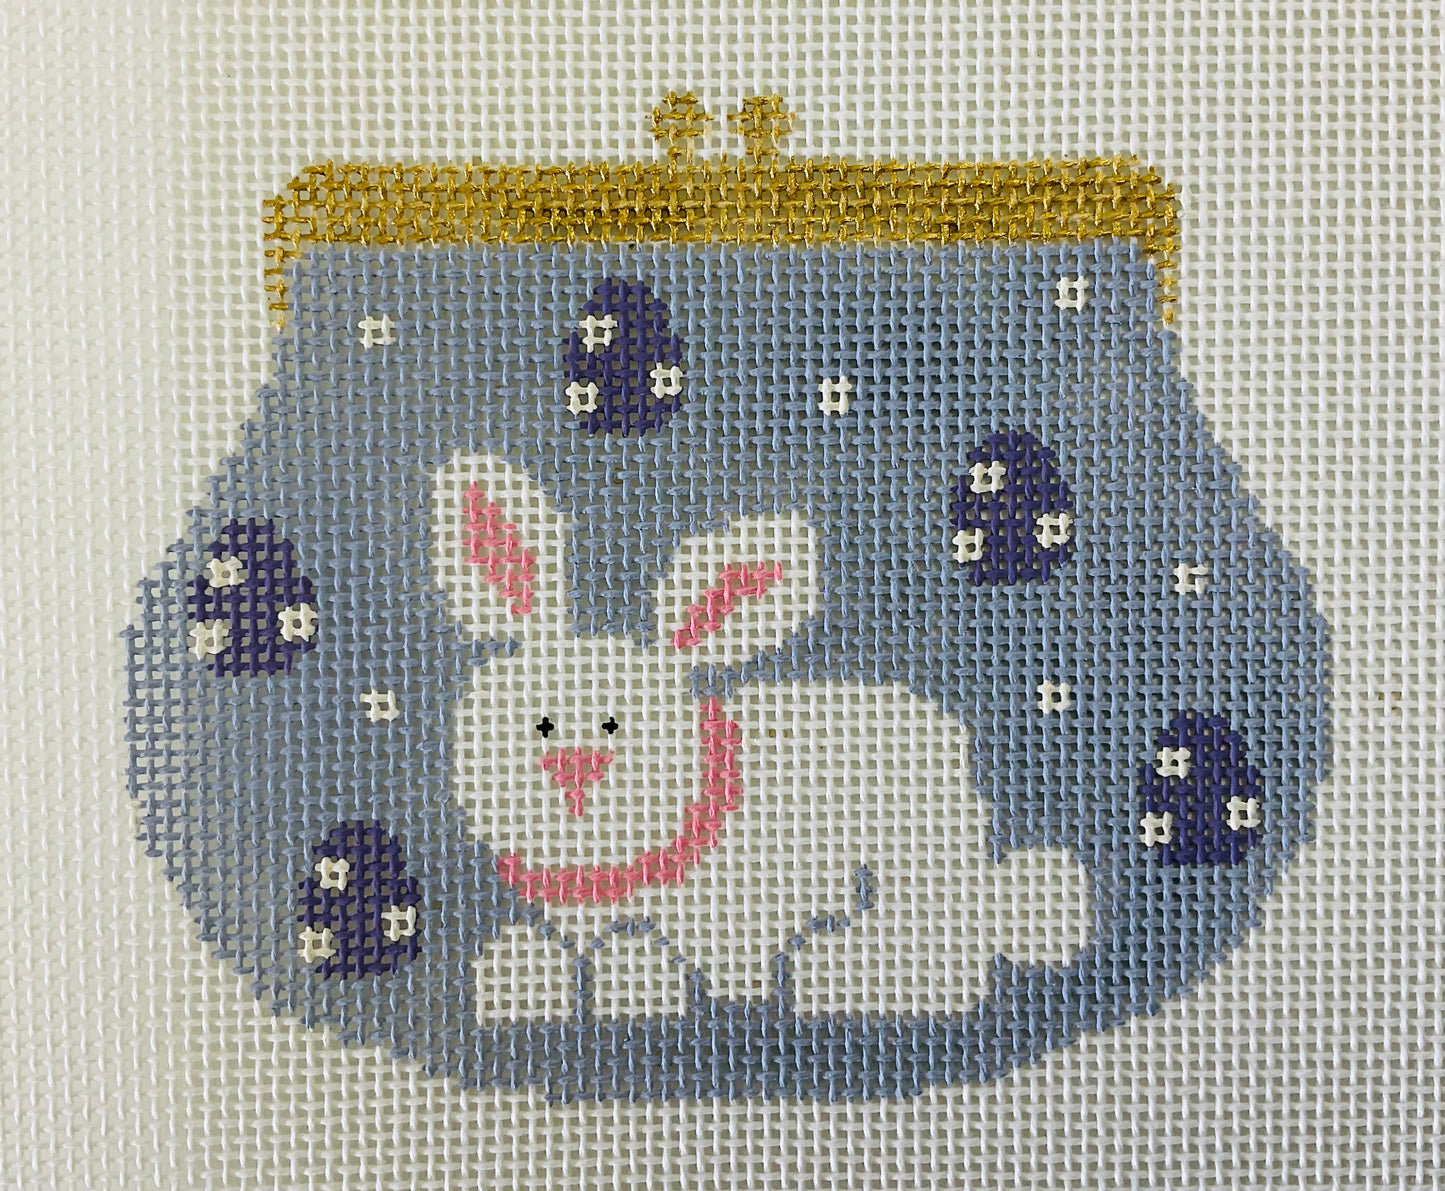 Bunny Purse Ornament with Stitch Guide